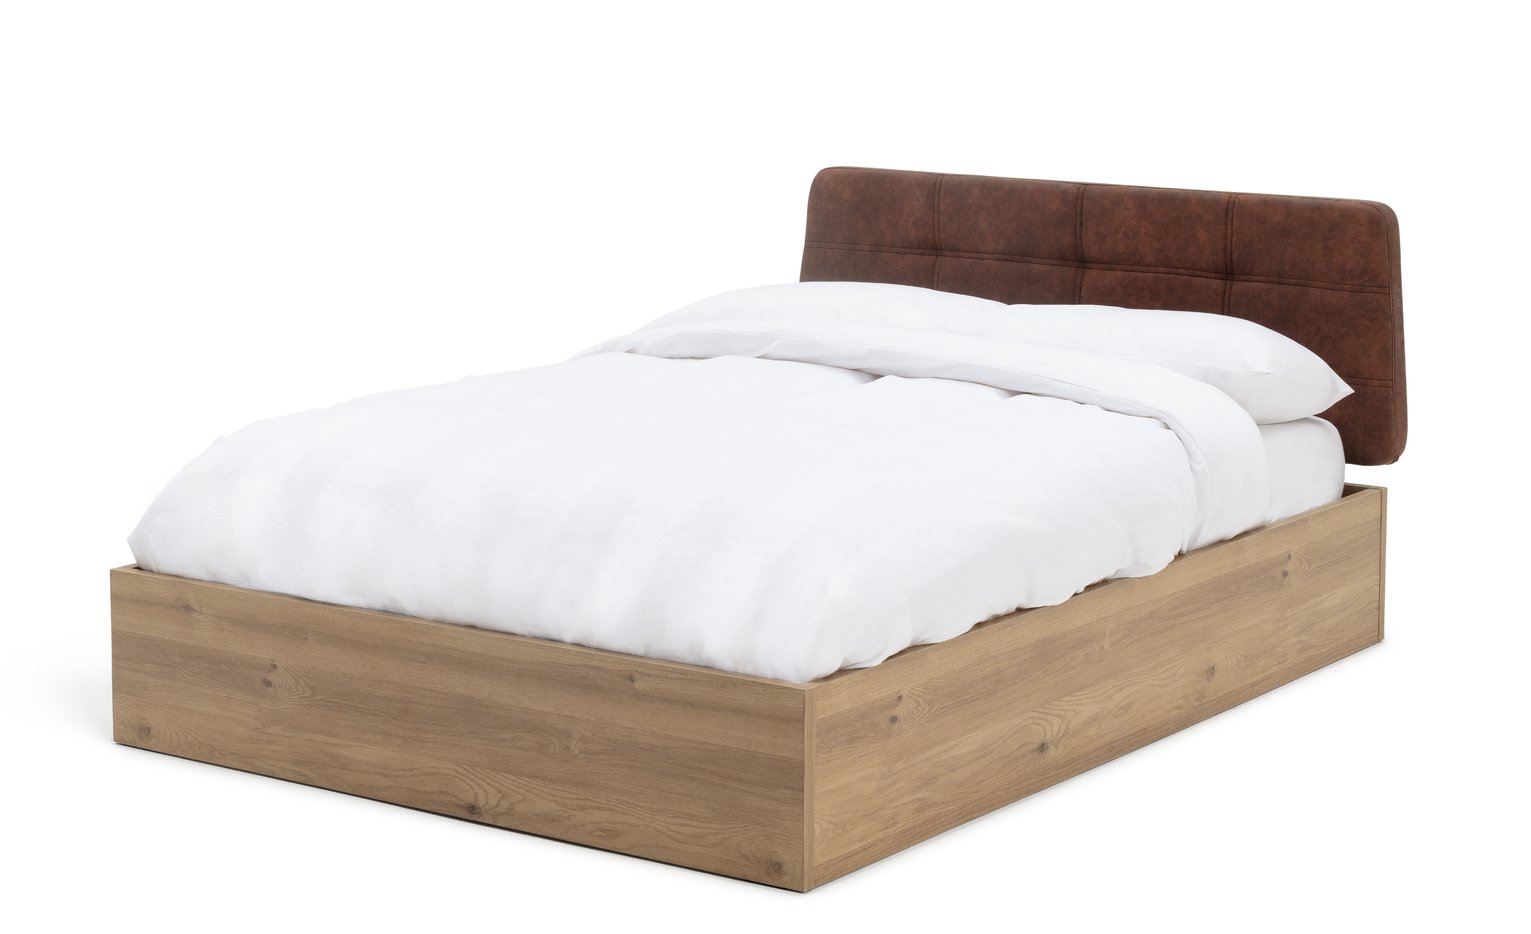 Argos Home Tribeca Kingsize Ottoman Bed Frame Review